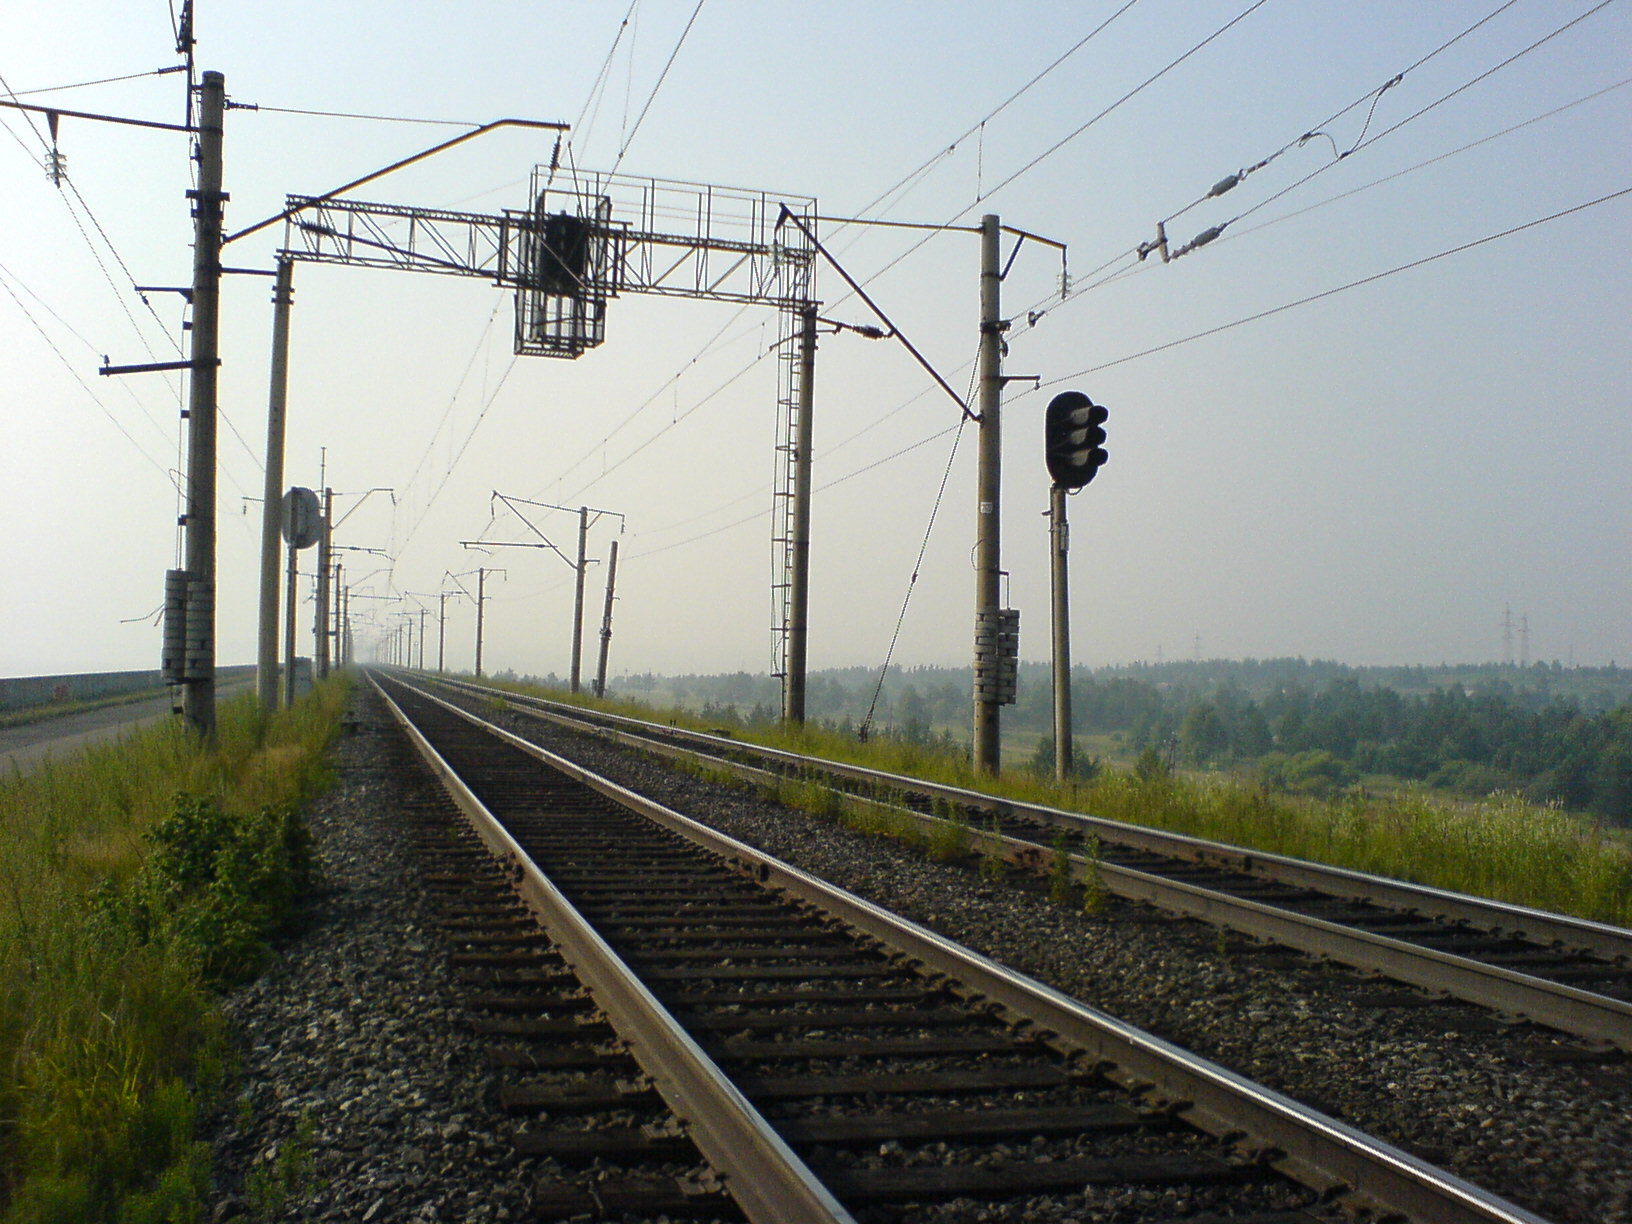 Kazakhstan-Turkmenistan-Iran railway beneficial for region